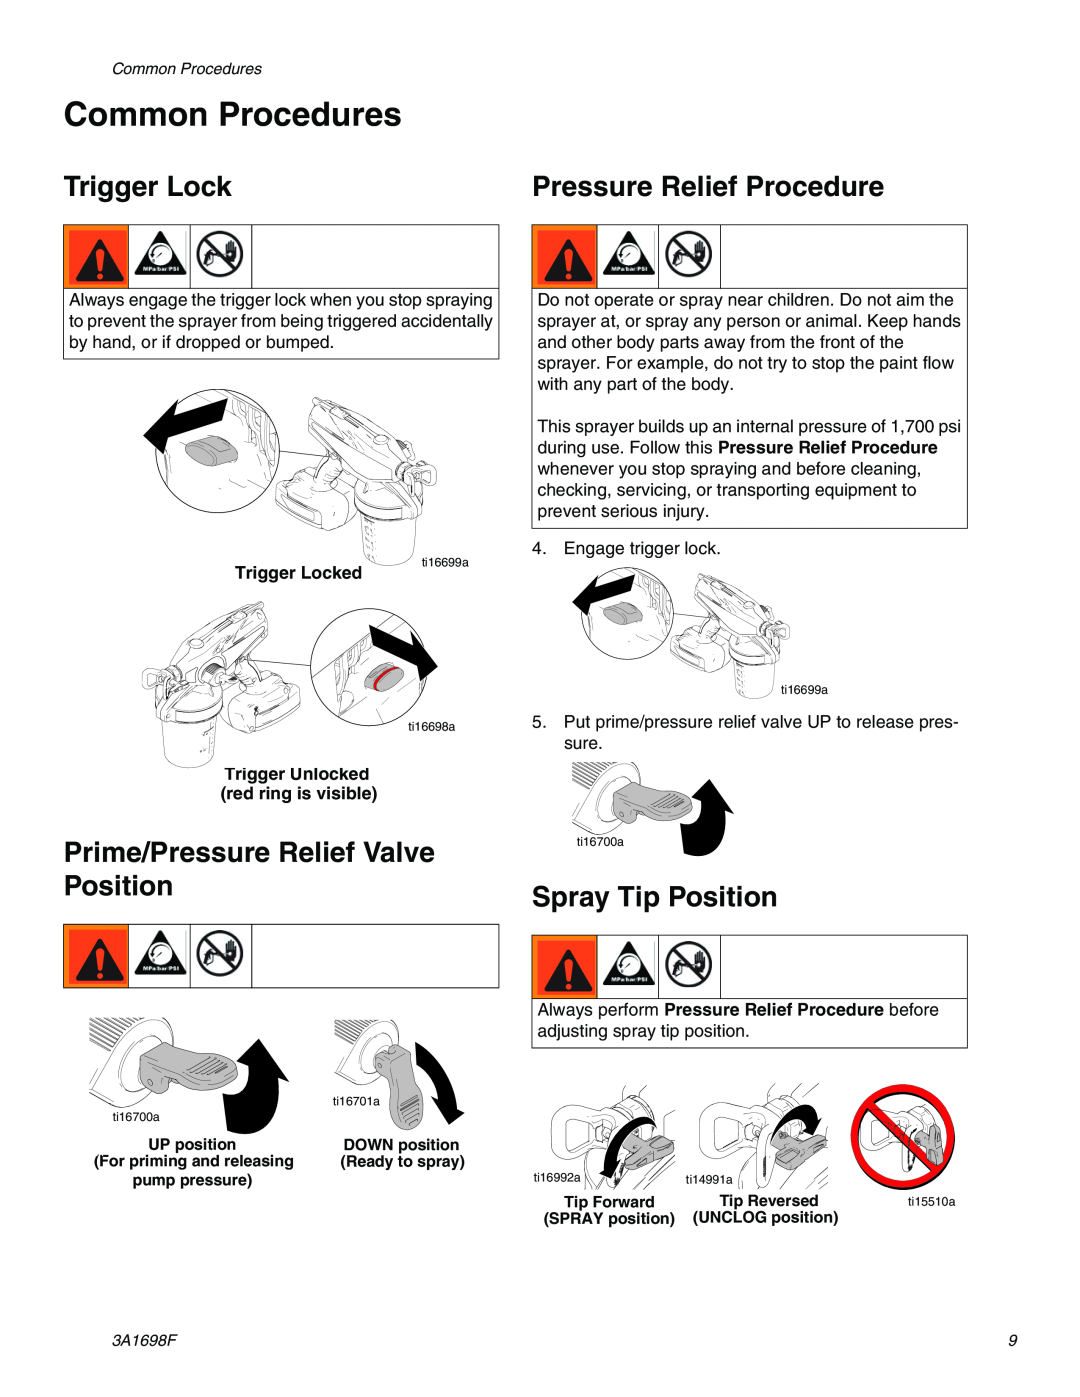 Graco 16H243, 262612 Trigger Lock, Pressure Relief Procedure, Prime/Pressure Relief Valve Position, Spray Tip Position 